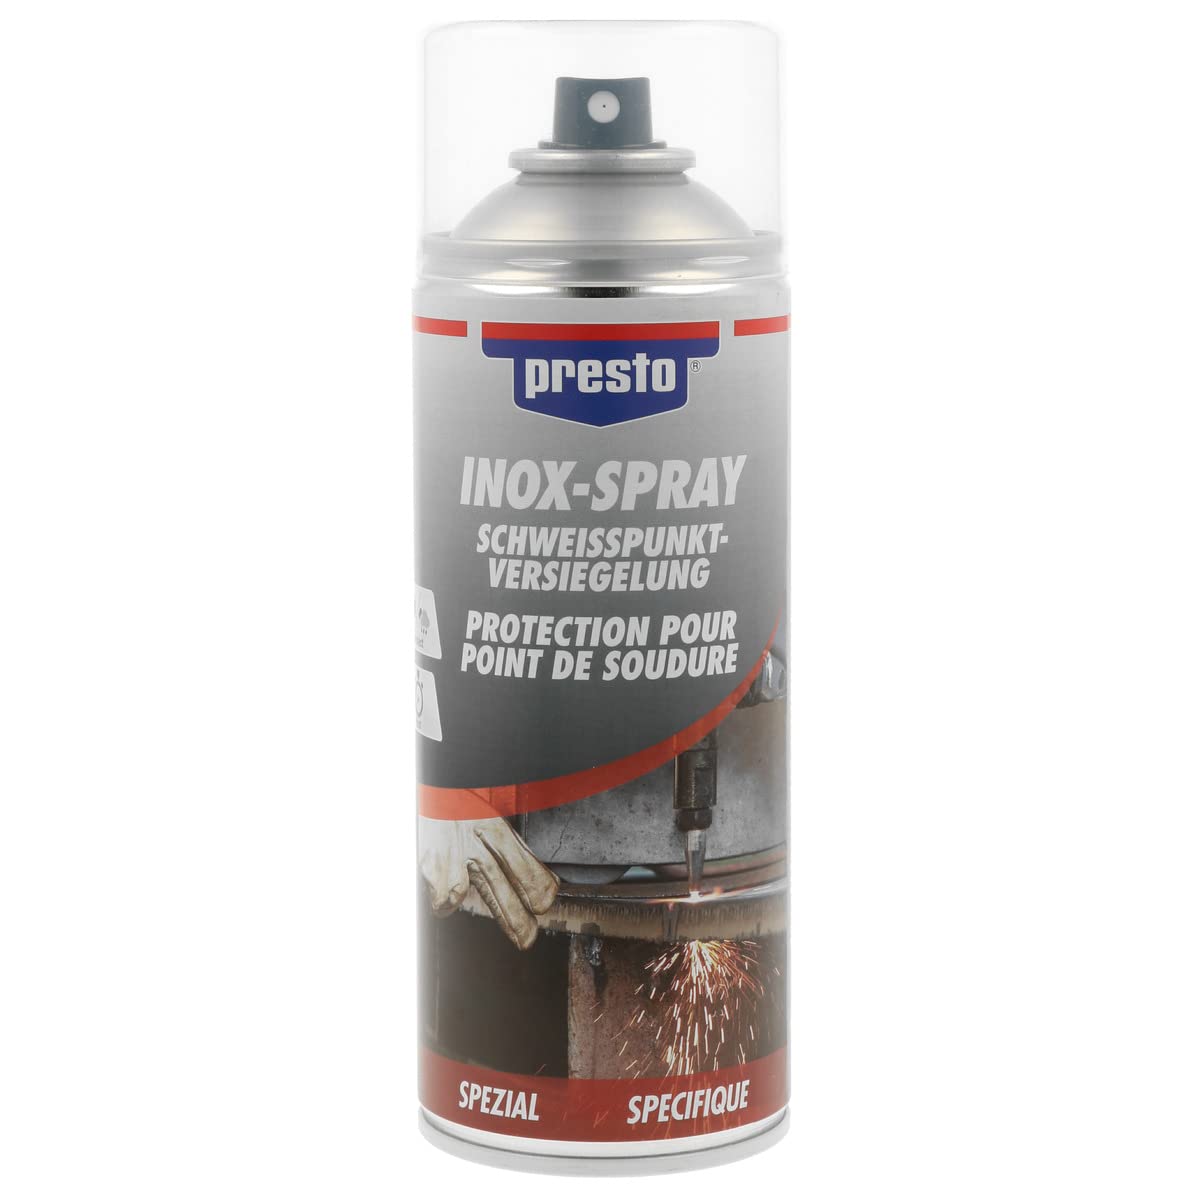 presto 322532 Inox-Spray 400 ml von Presto